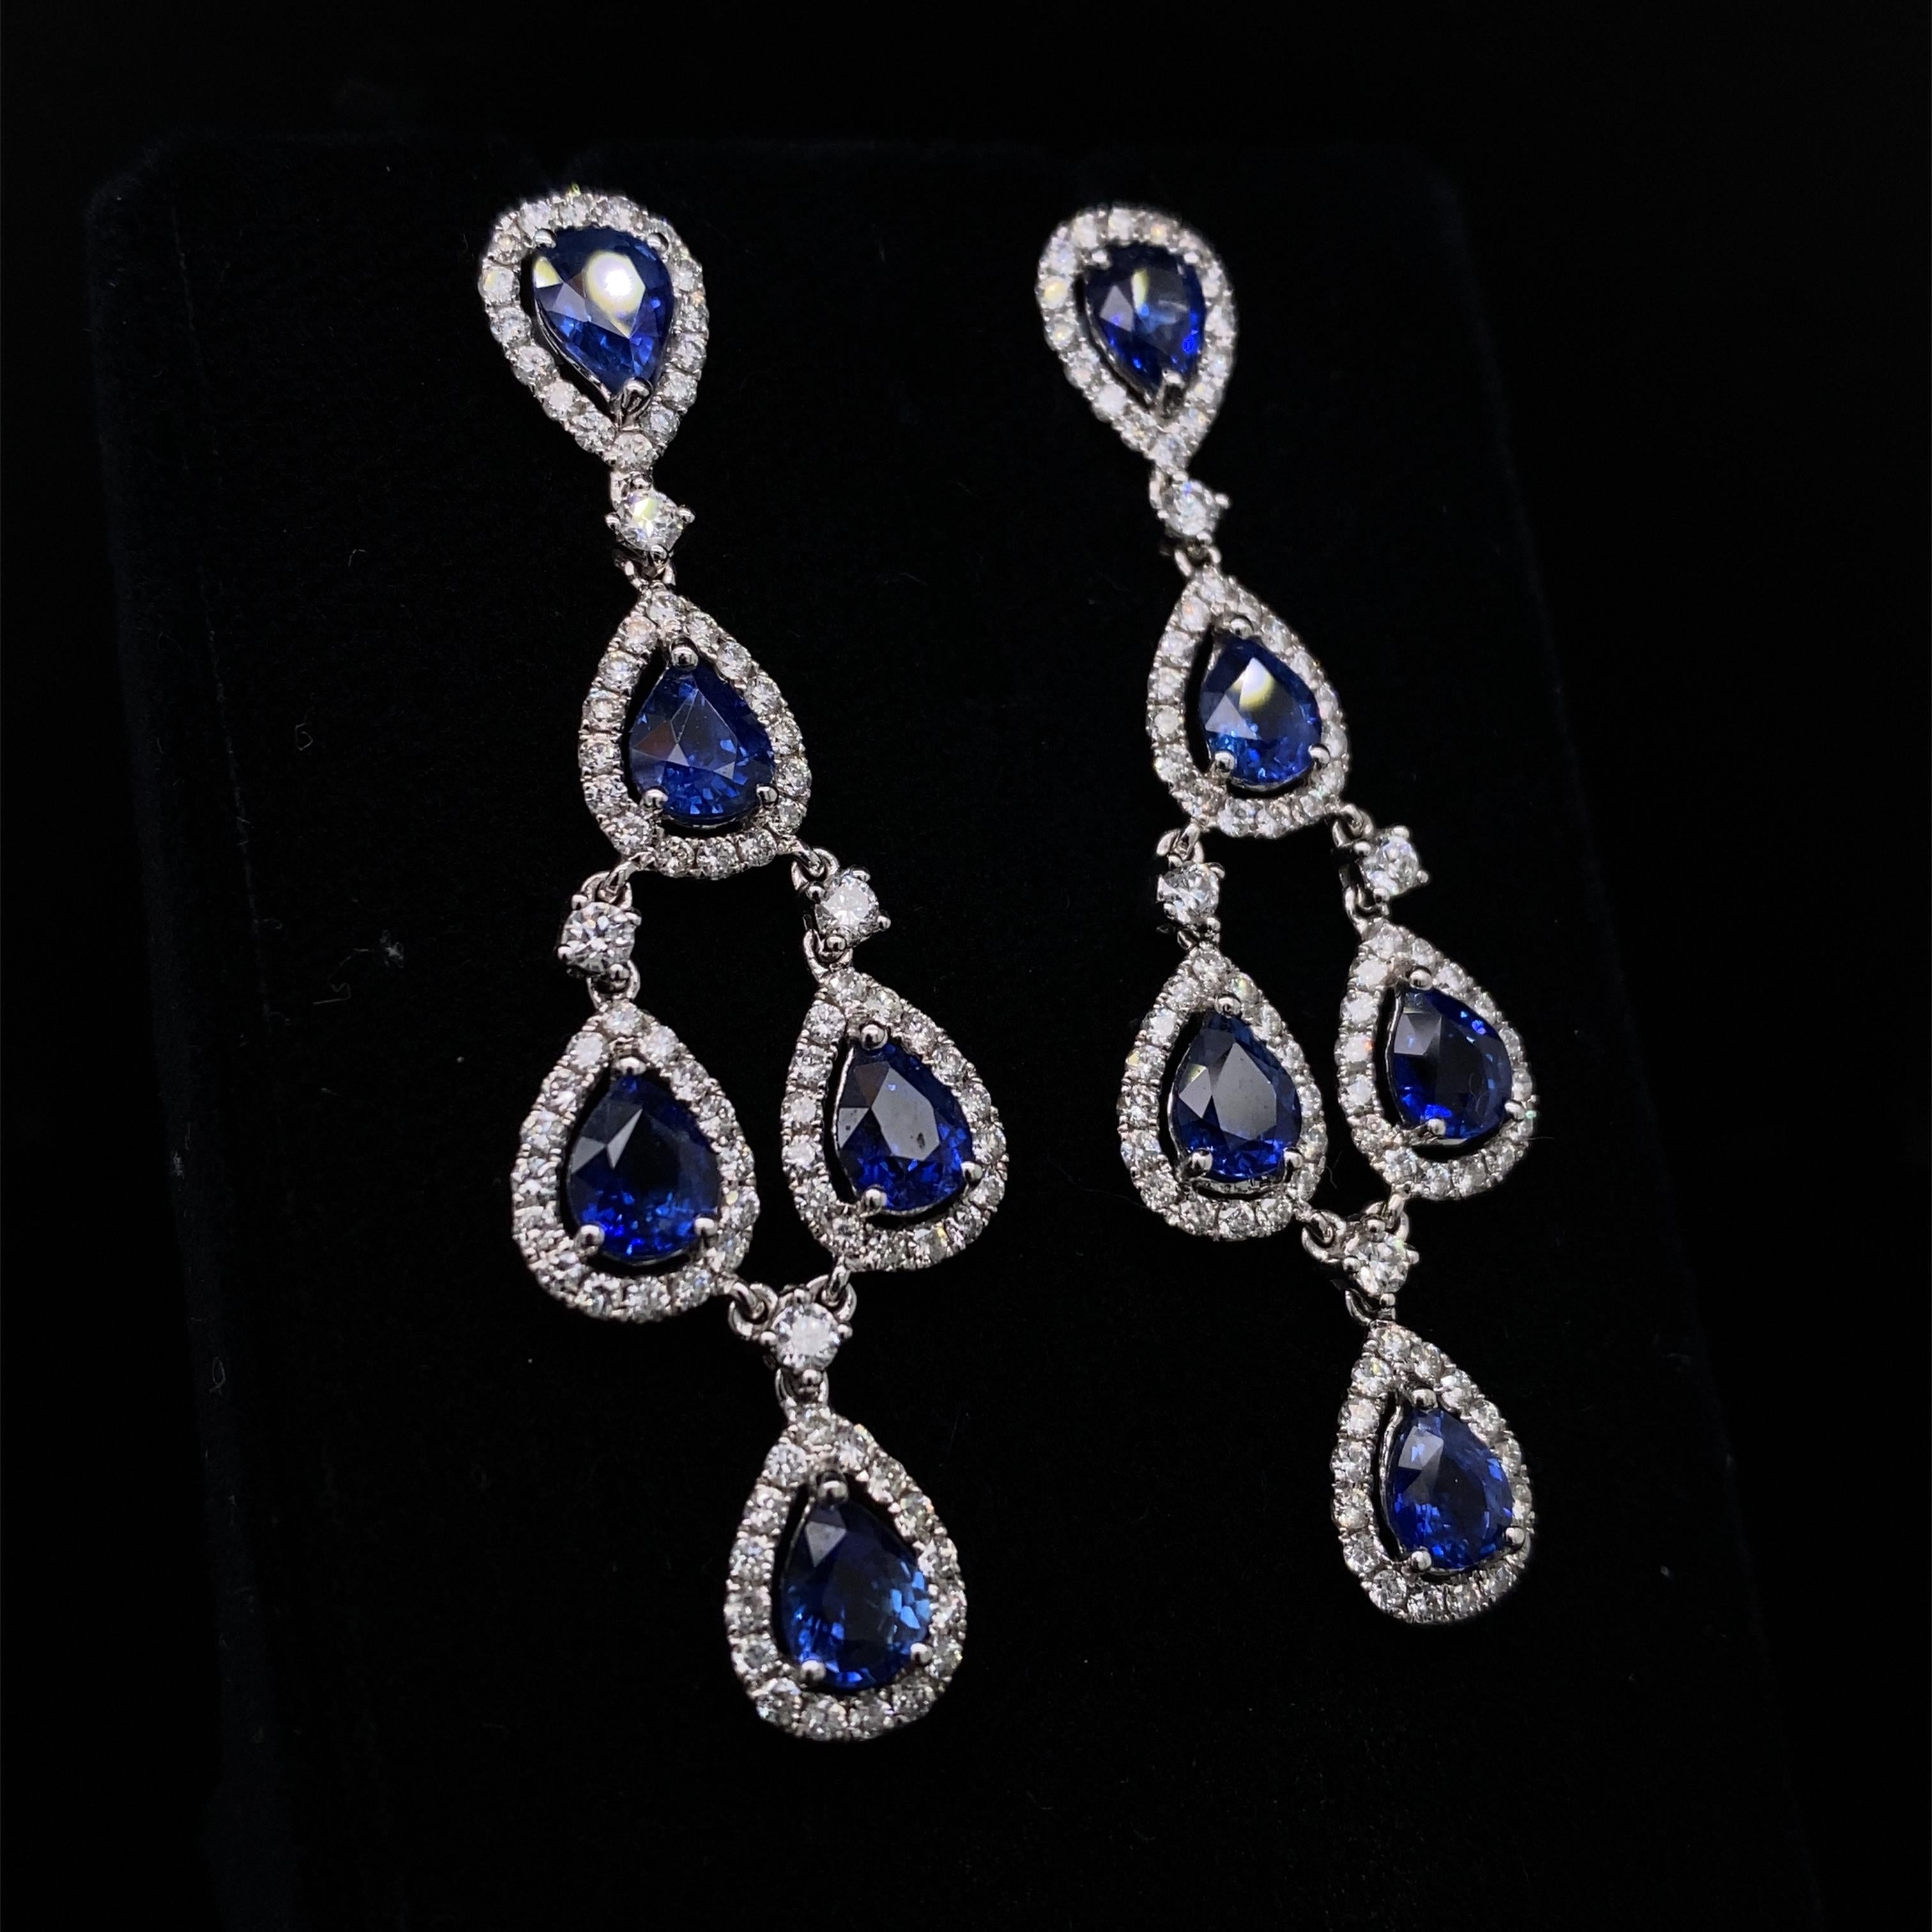 diamondesque earrings